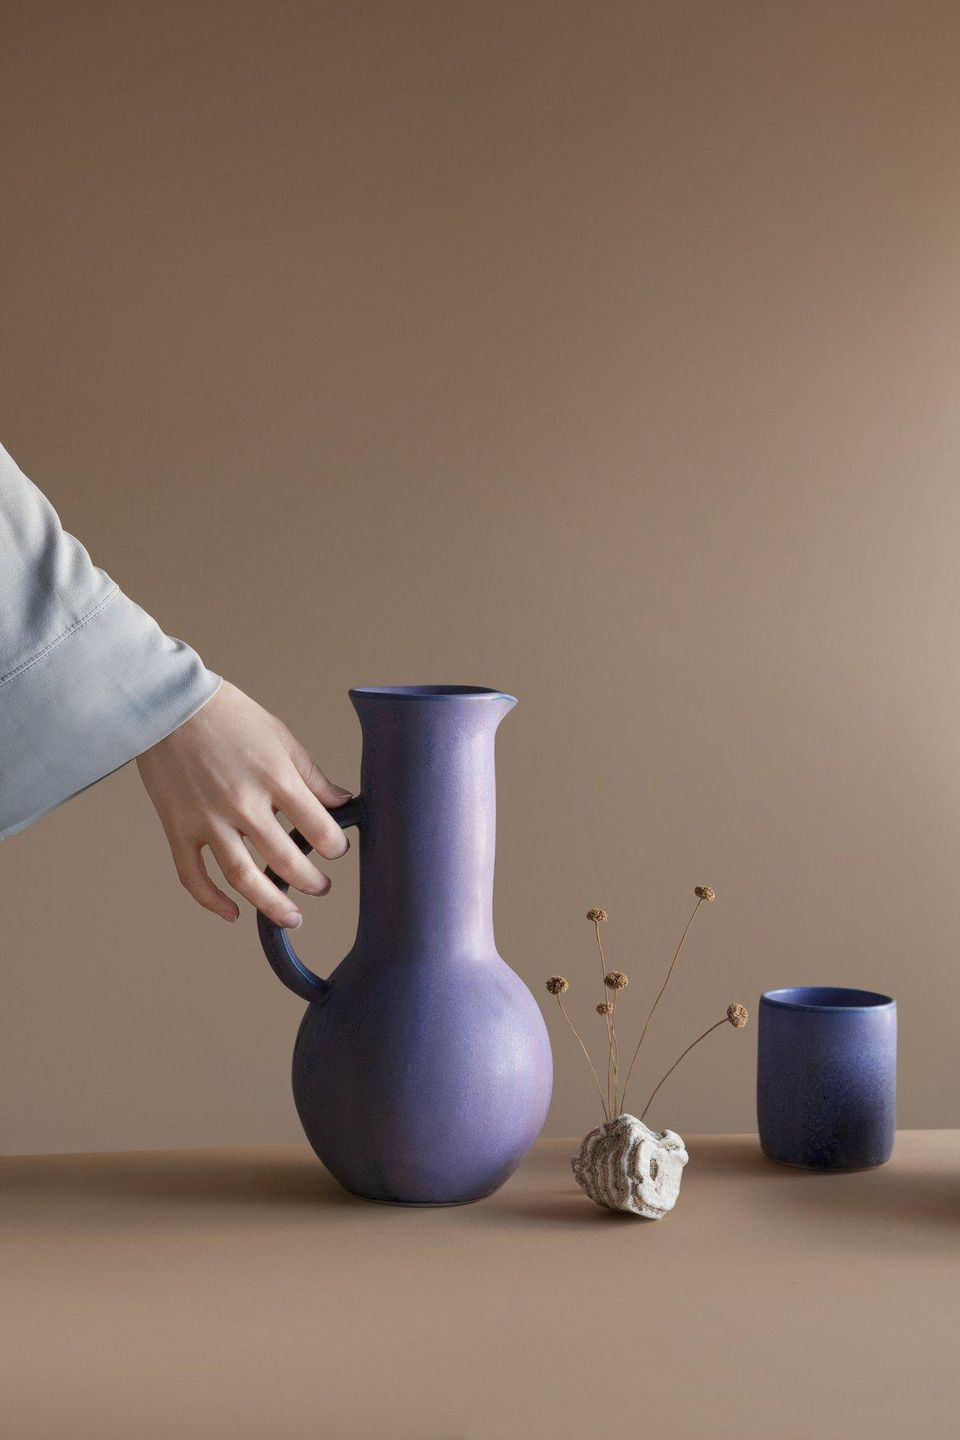 8 Handmade Ceramic Vases Worthy Of The Prettiest Summer Bouquets regarding size 960 X 1440